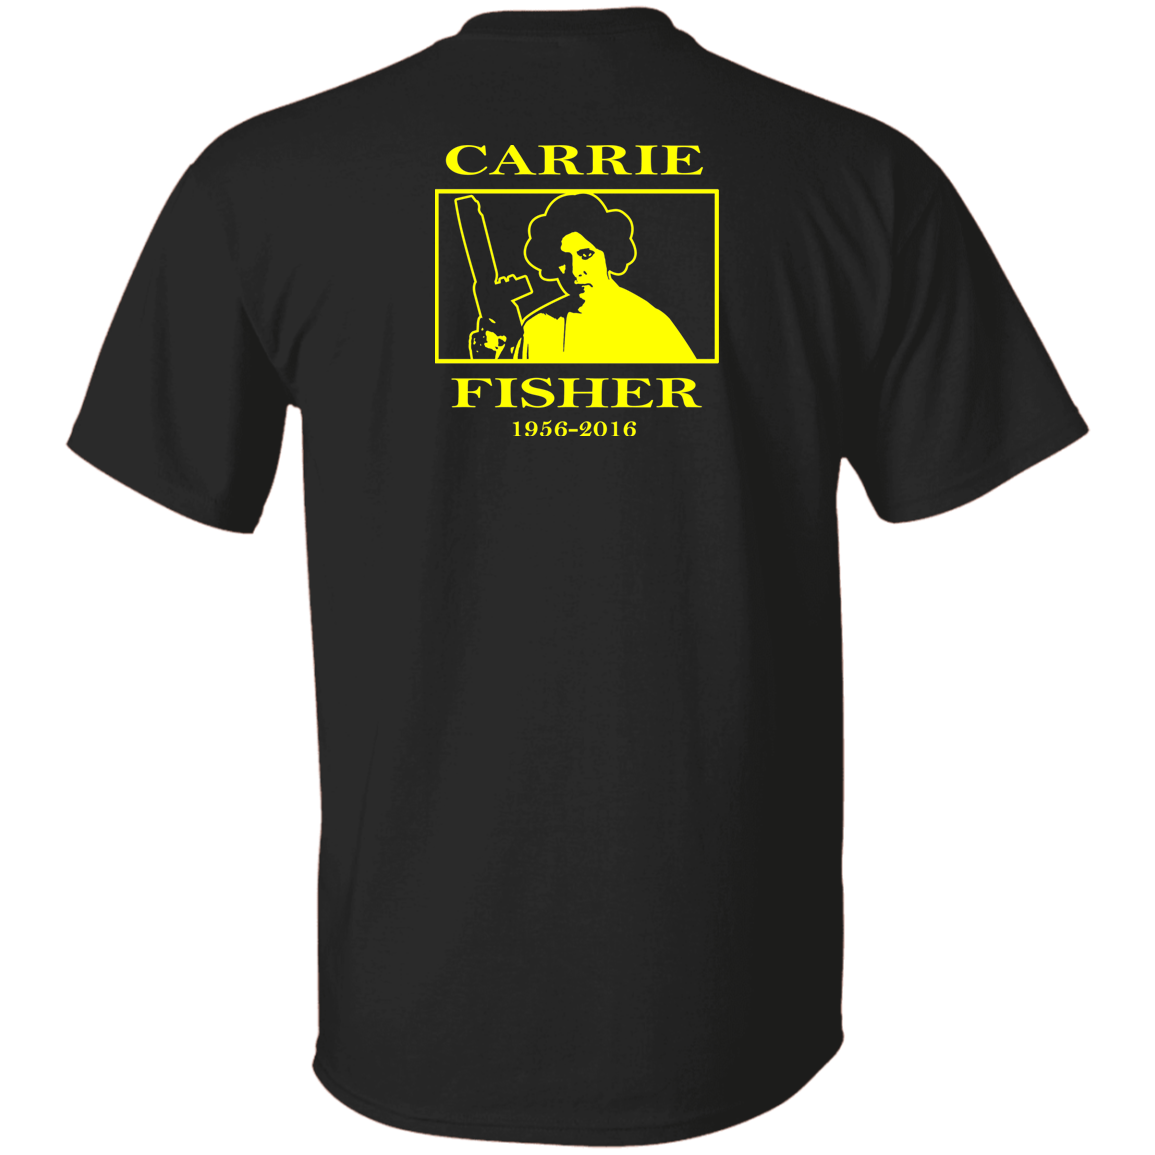 ArtichokeUSA Custom Design. You Miserable Slug. Carrie Fisher Tribute. Star Wars / Blues Brothers Fan Art. Parody. 5.3 oz. T-Shirt